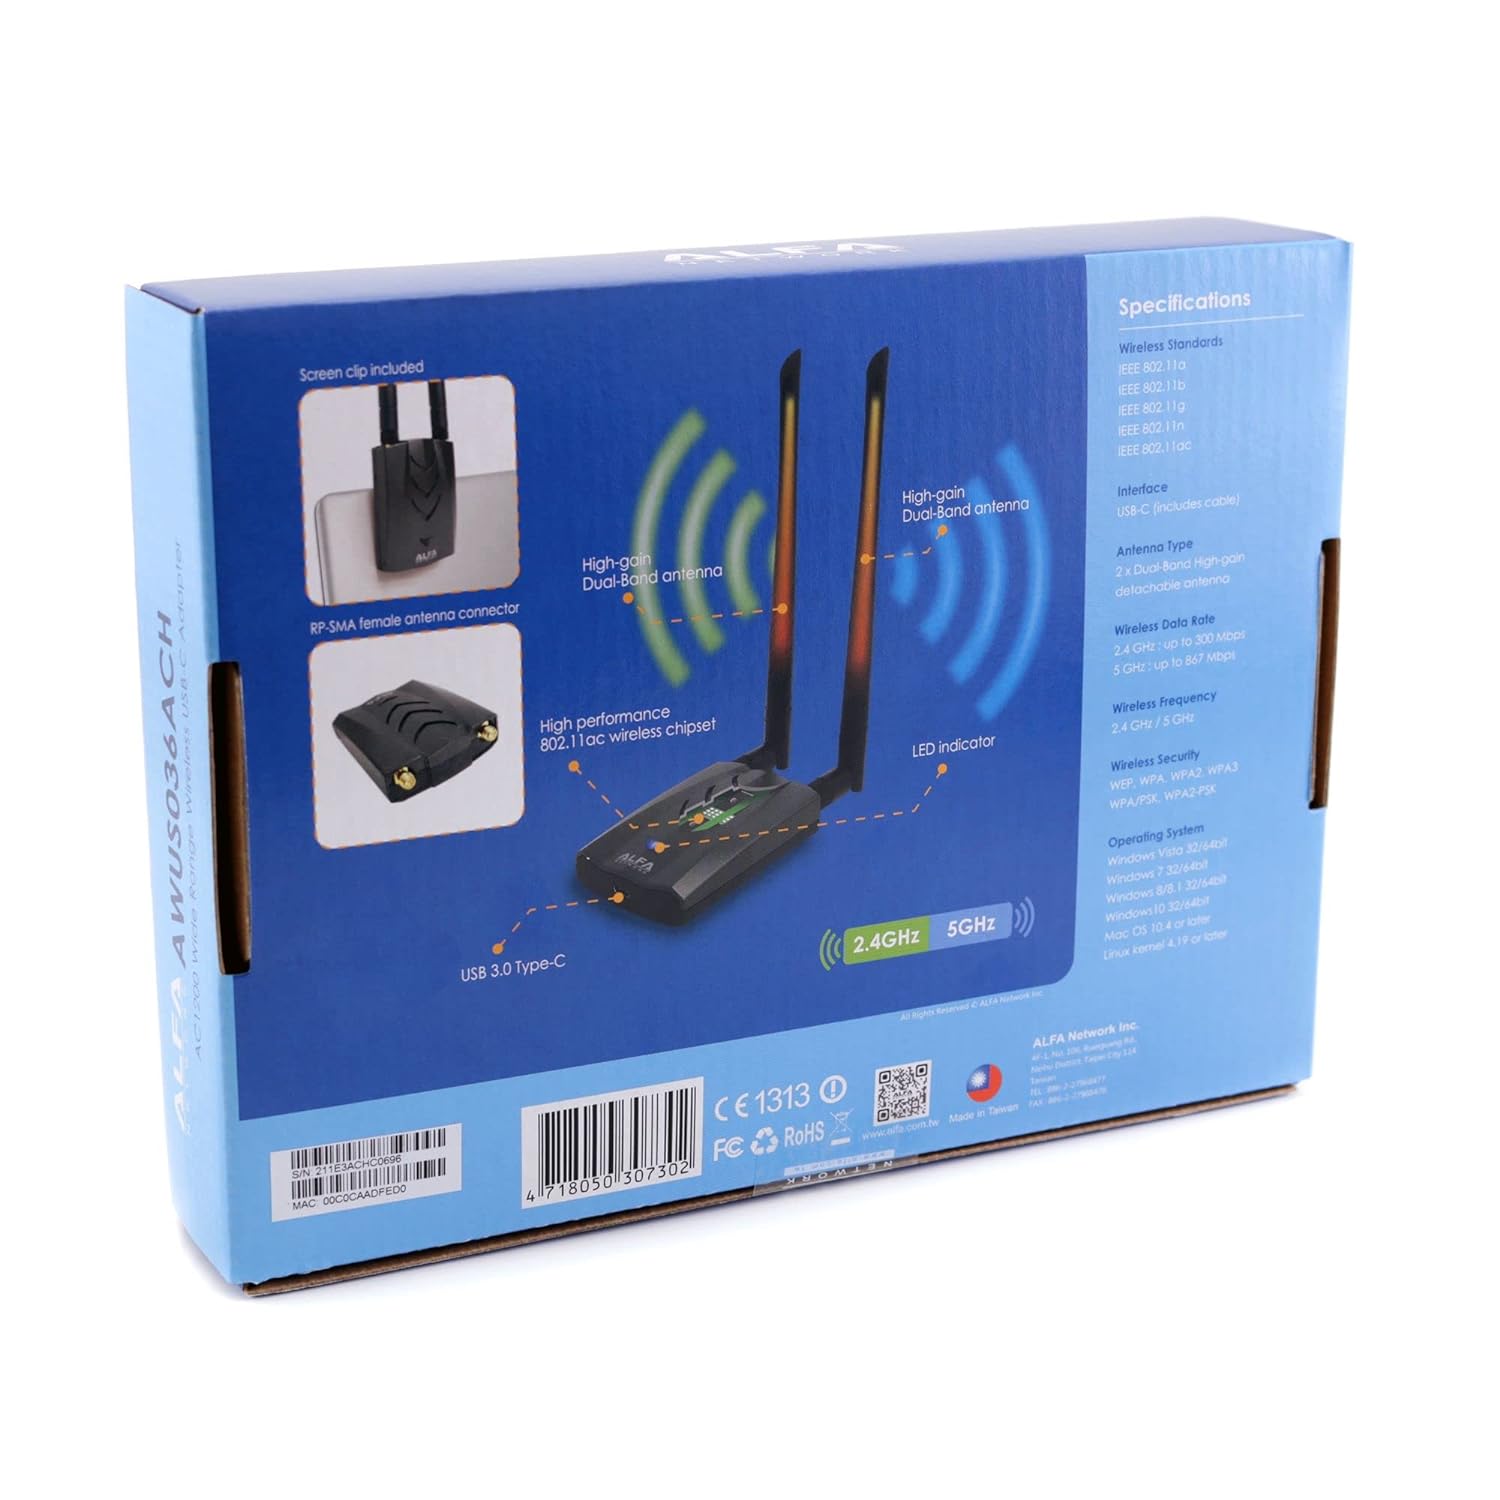 ALFA Network Long-Range Dual-Band AC1200 Wireless USB 3.0 Wi-Fi Adapter w/2x 5dBi External Antennas - 2.4GHz 300Mbps/5GHz 867Mbps - 802.11ac & A, B, G, N